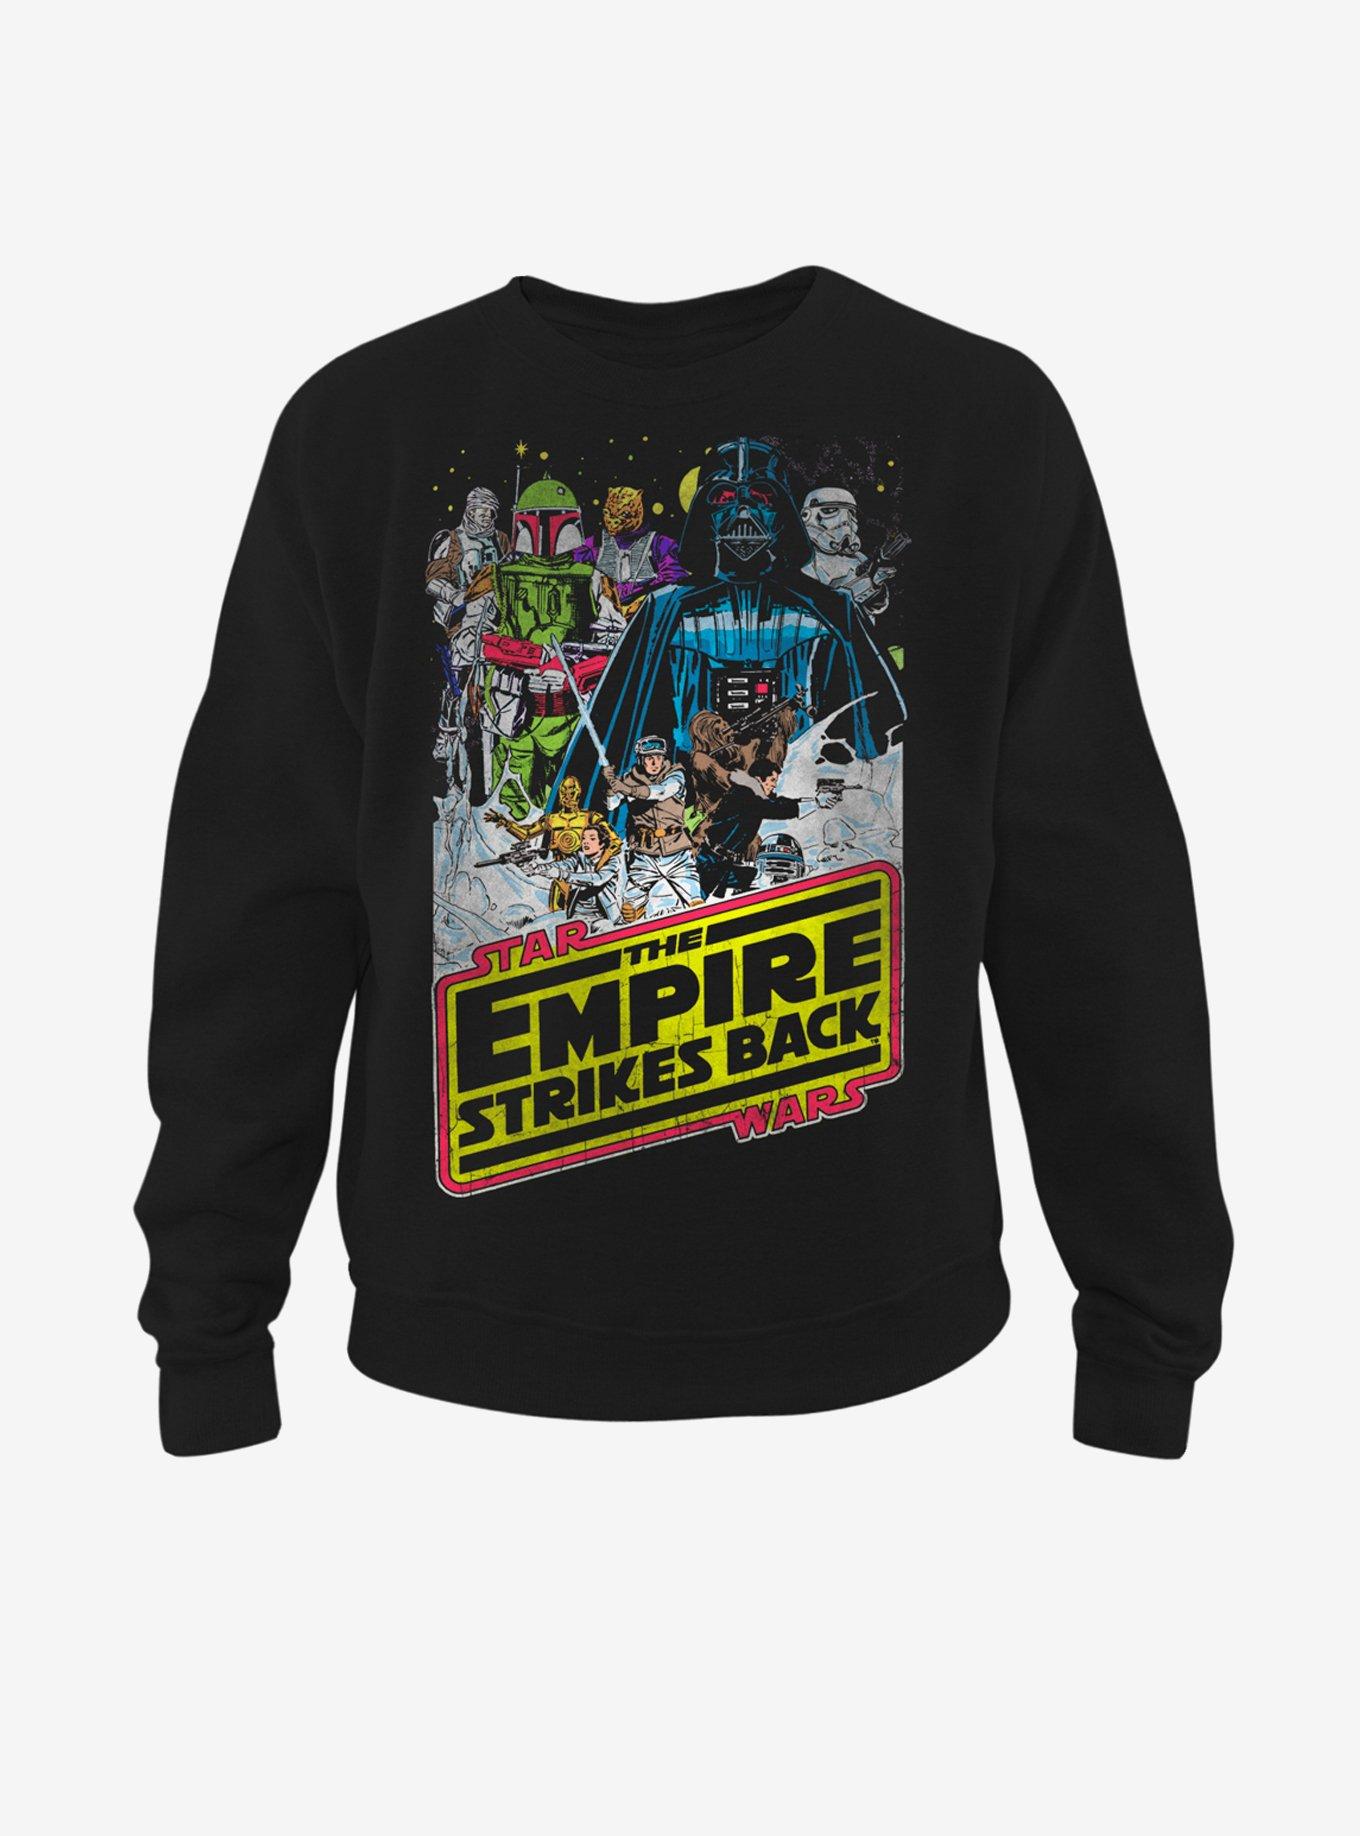 Star Wars: The Empire Strikes Back Vintage Poster Sweatshirt